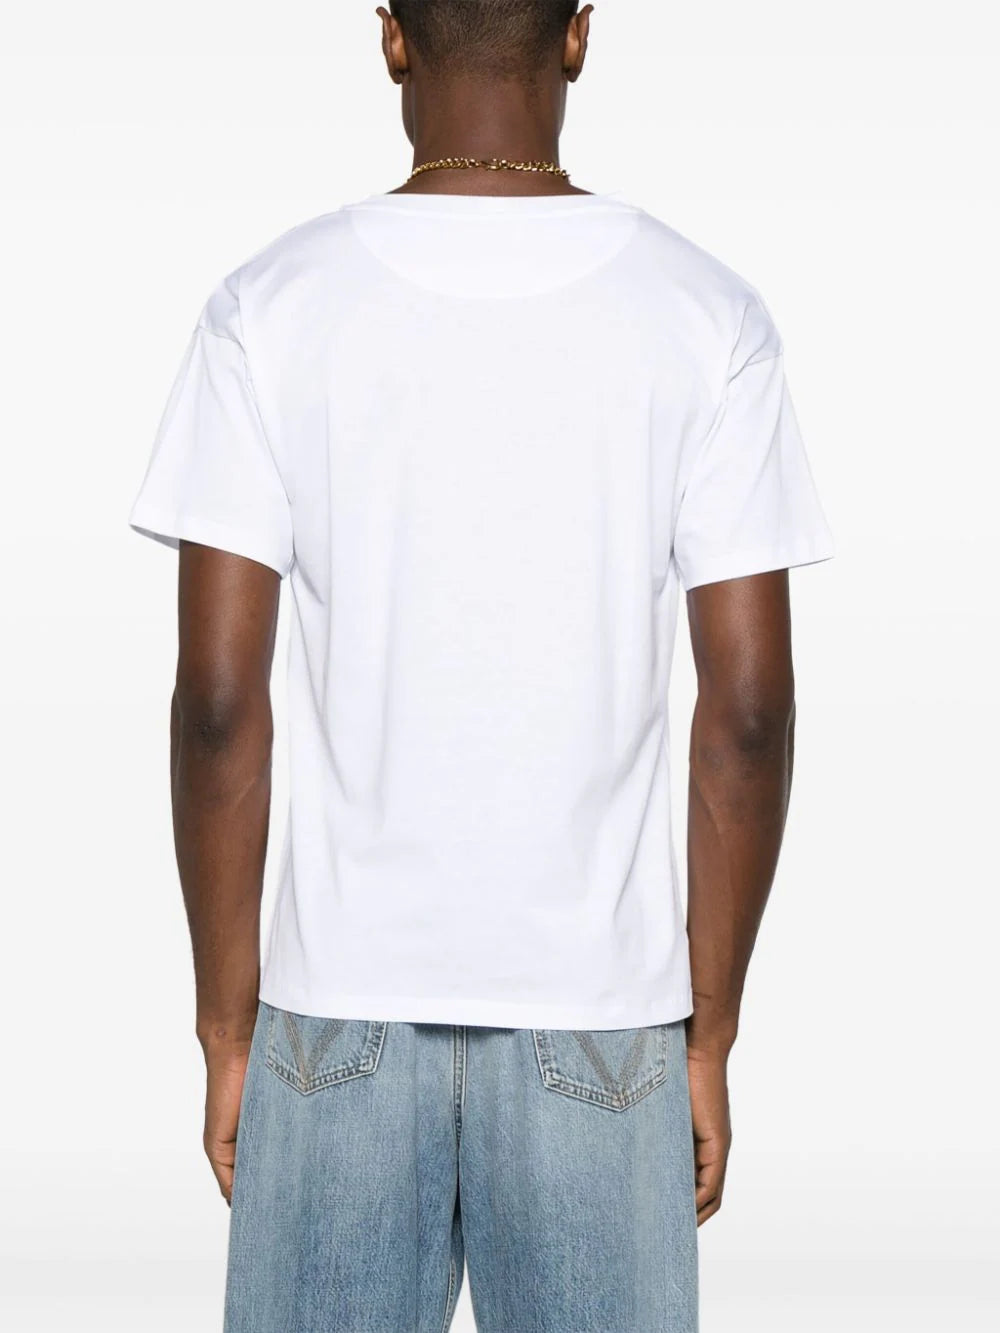 Bally White Logo-Print T-Shirt